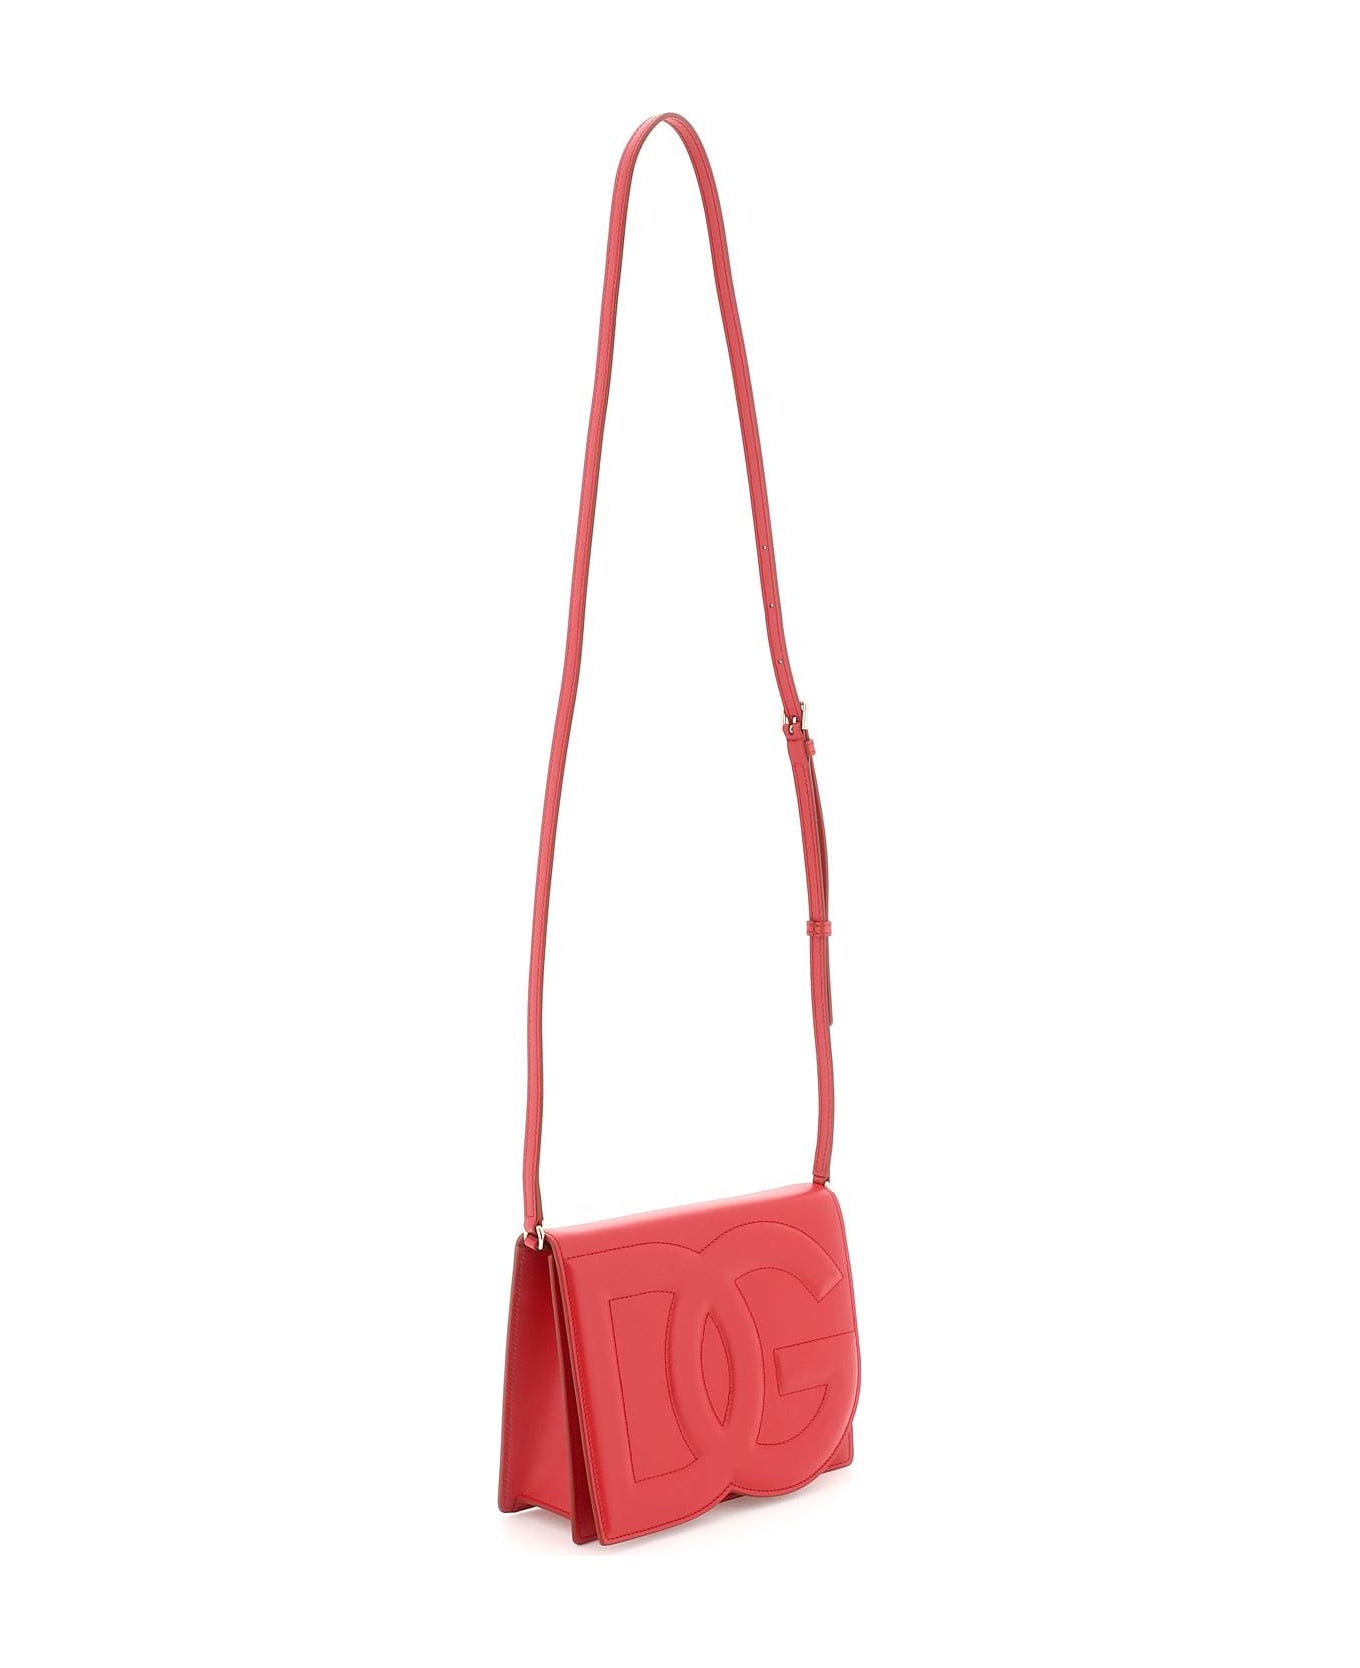 Dolce & Gabbana Leather Shoulder Bag - Rosso ショルダーバッグ